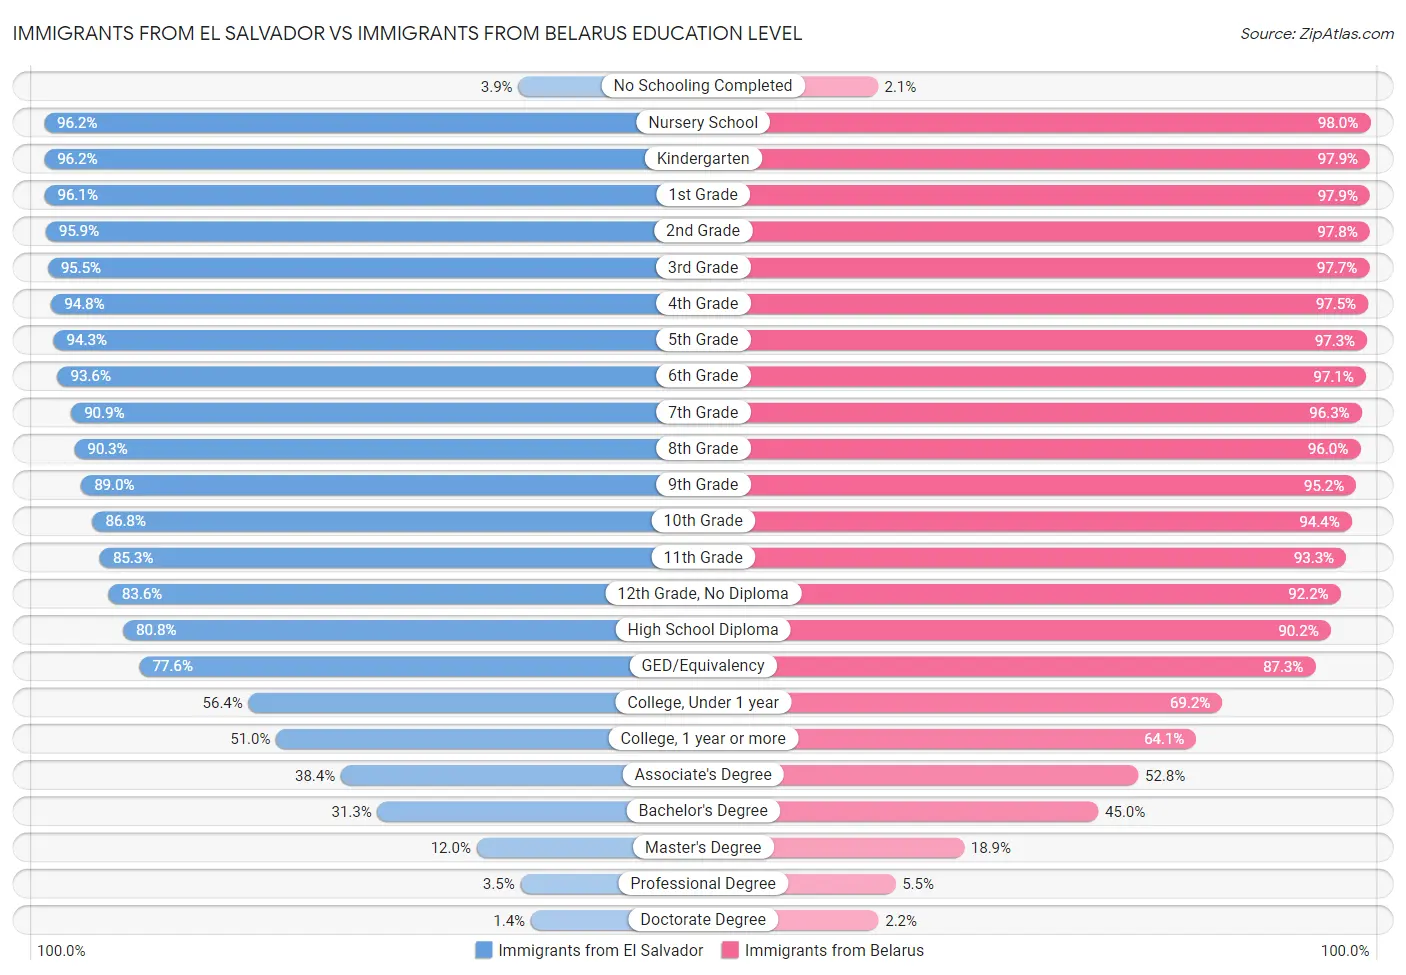 Immigrants from El Salvador vs Immigrants from Belarus Education Level